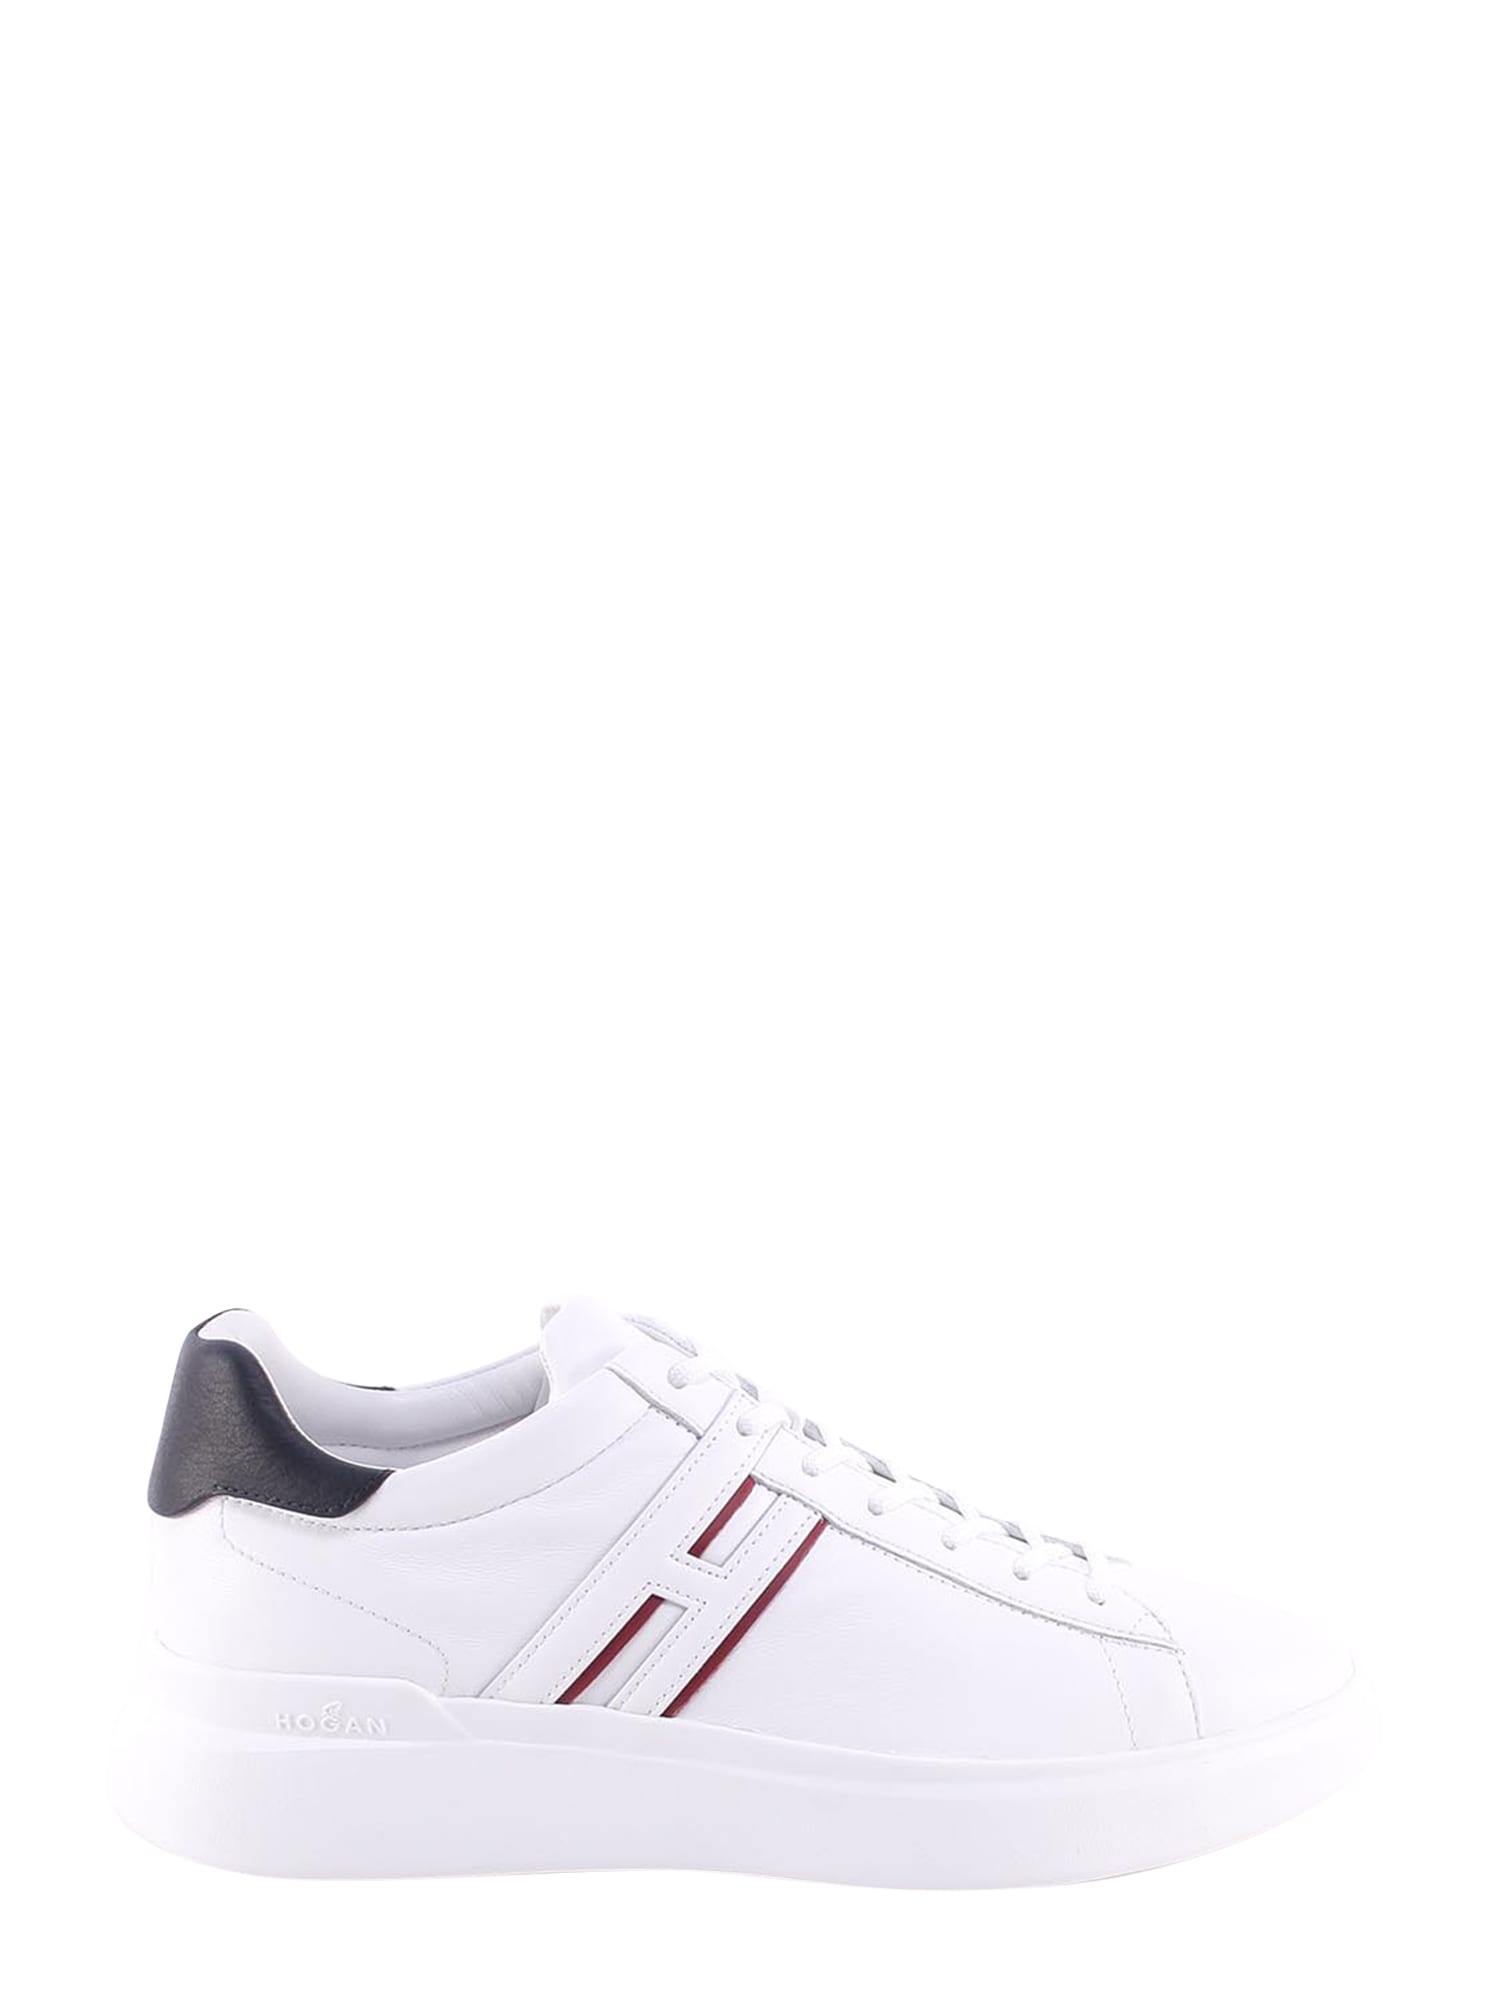 Hogan H580 Sneakers In White